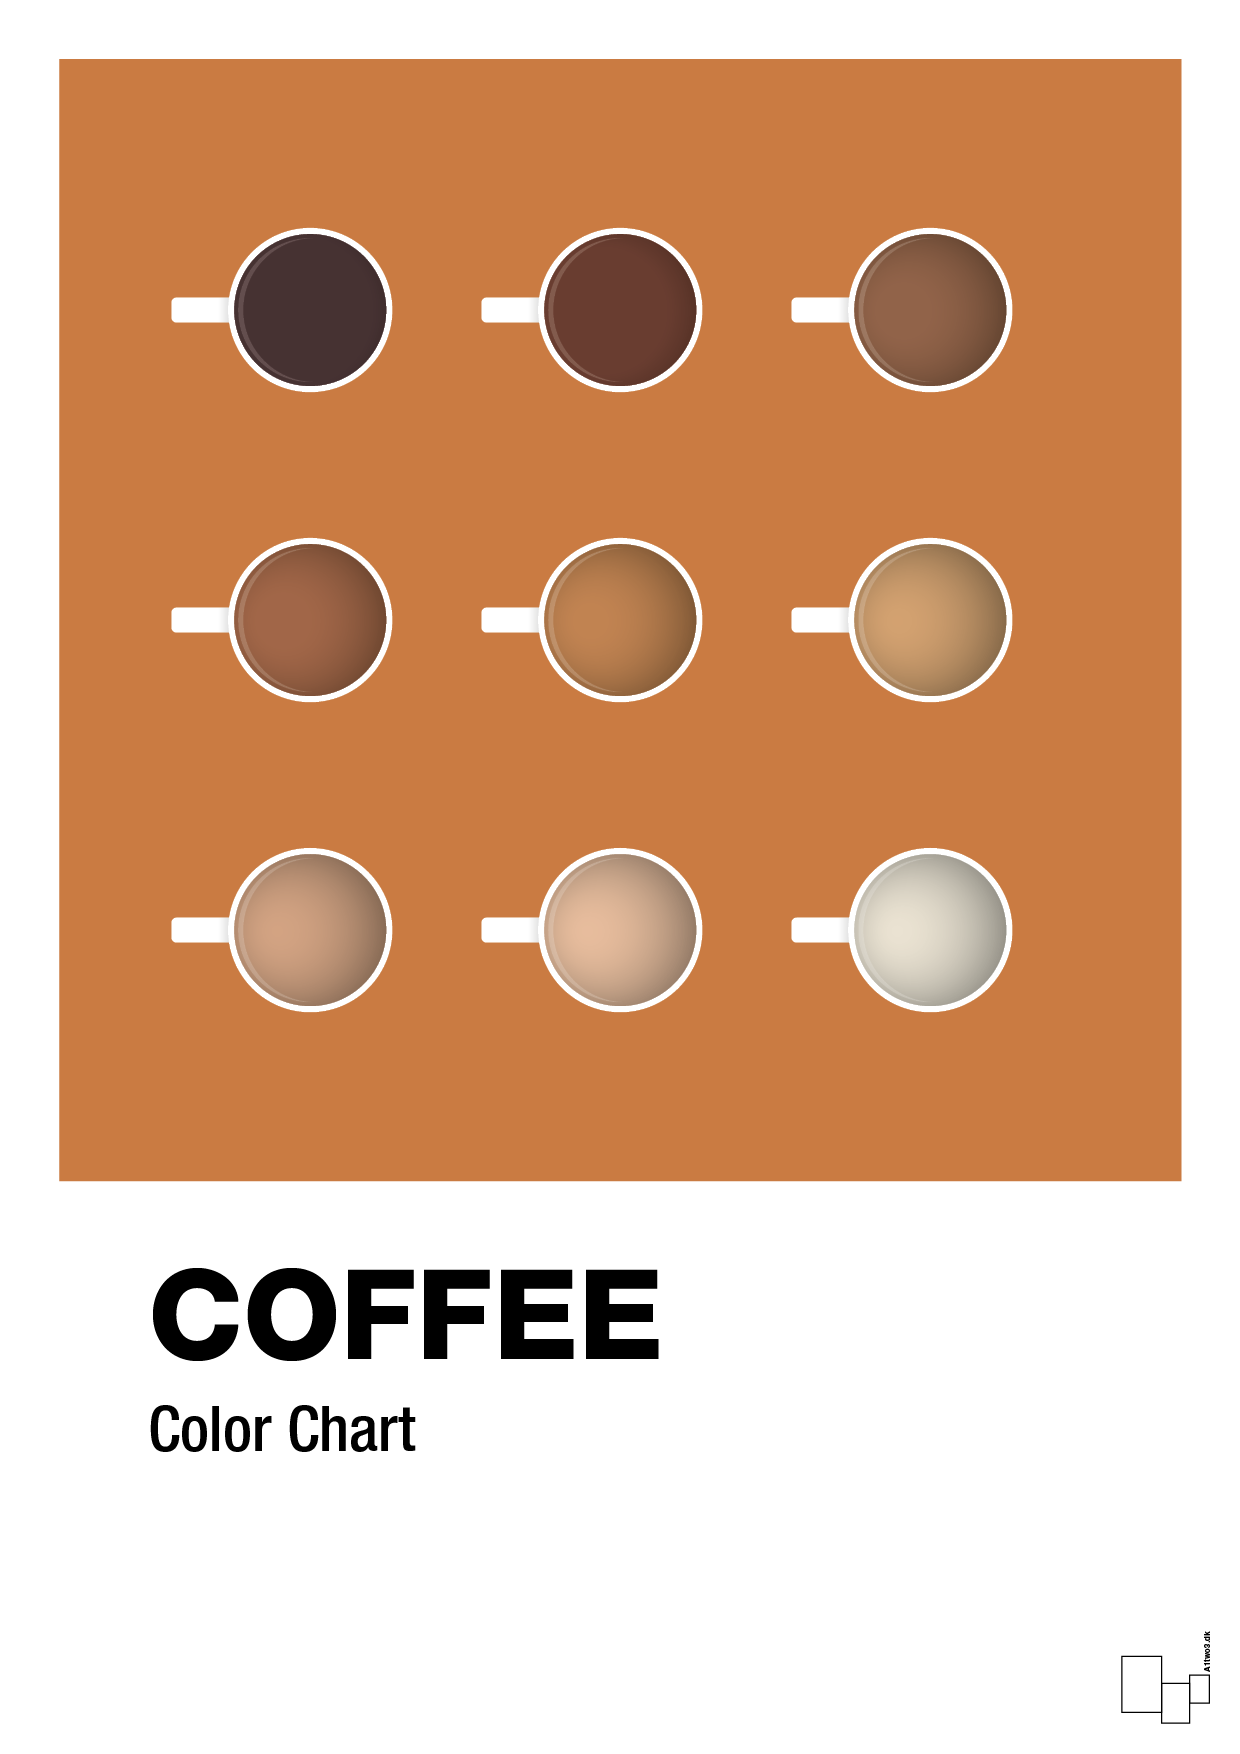 coffee color chart - Plakat med Mad & Drikke i Rumba Orange